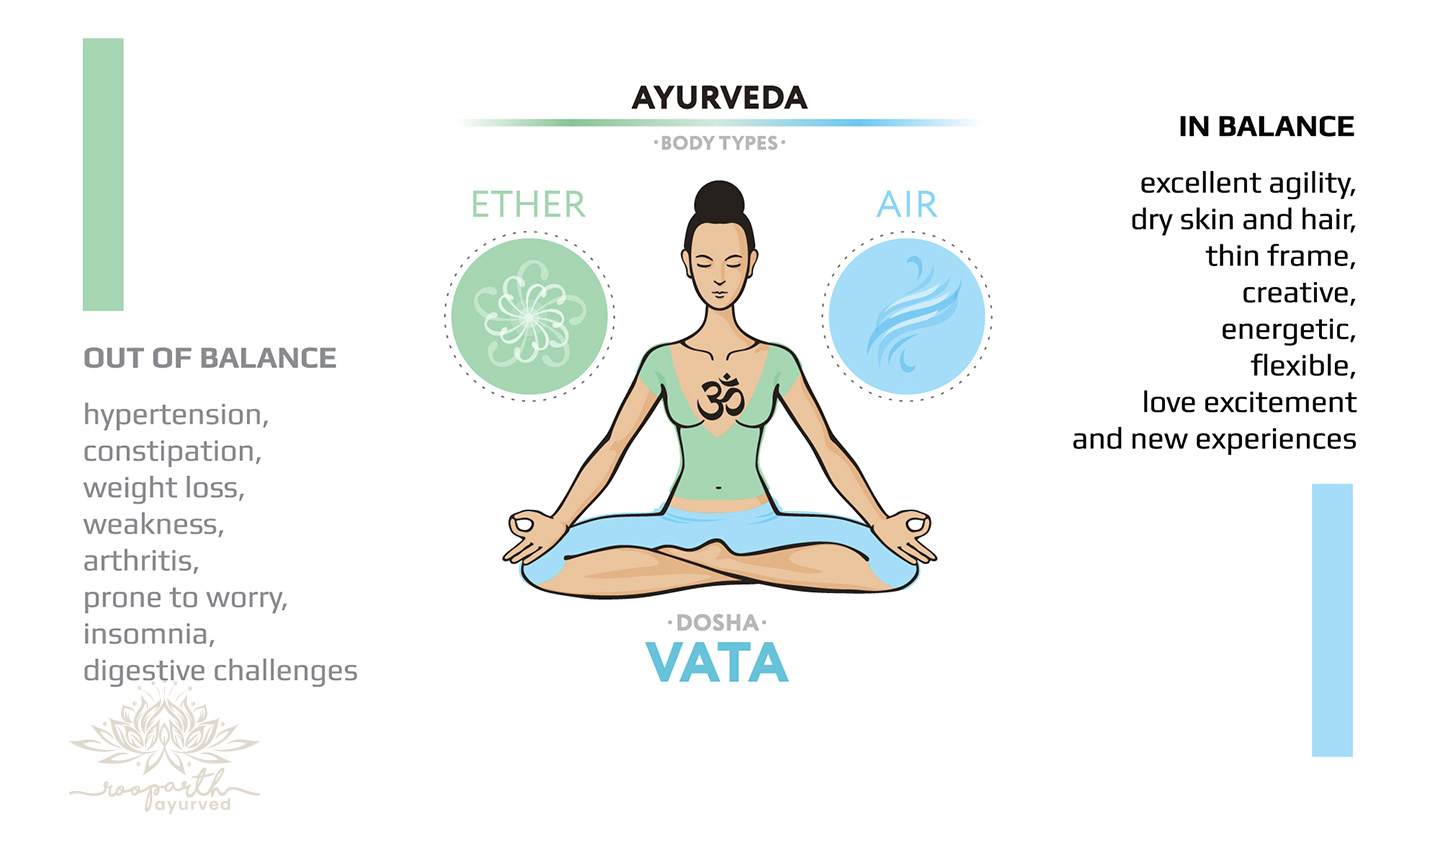 Ayurveda says about Vata